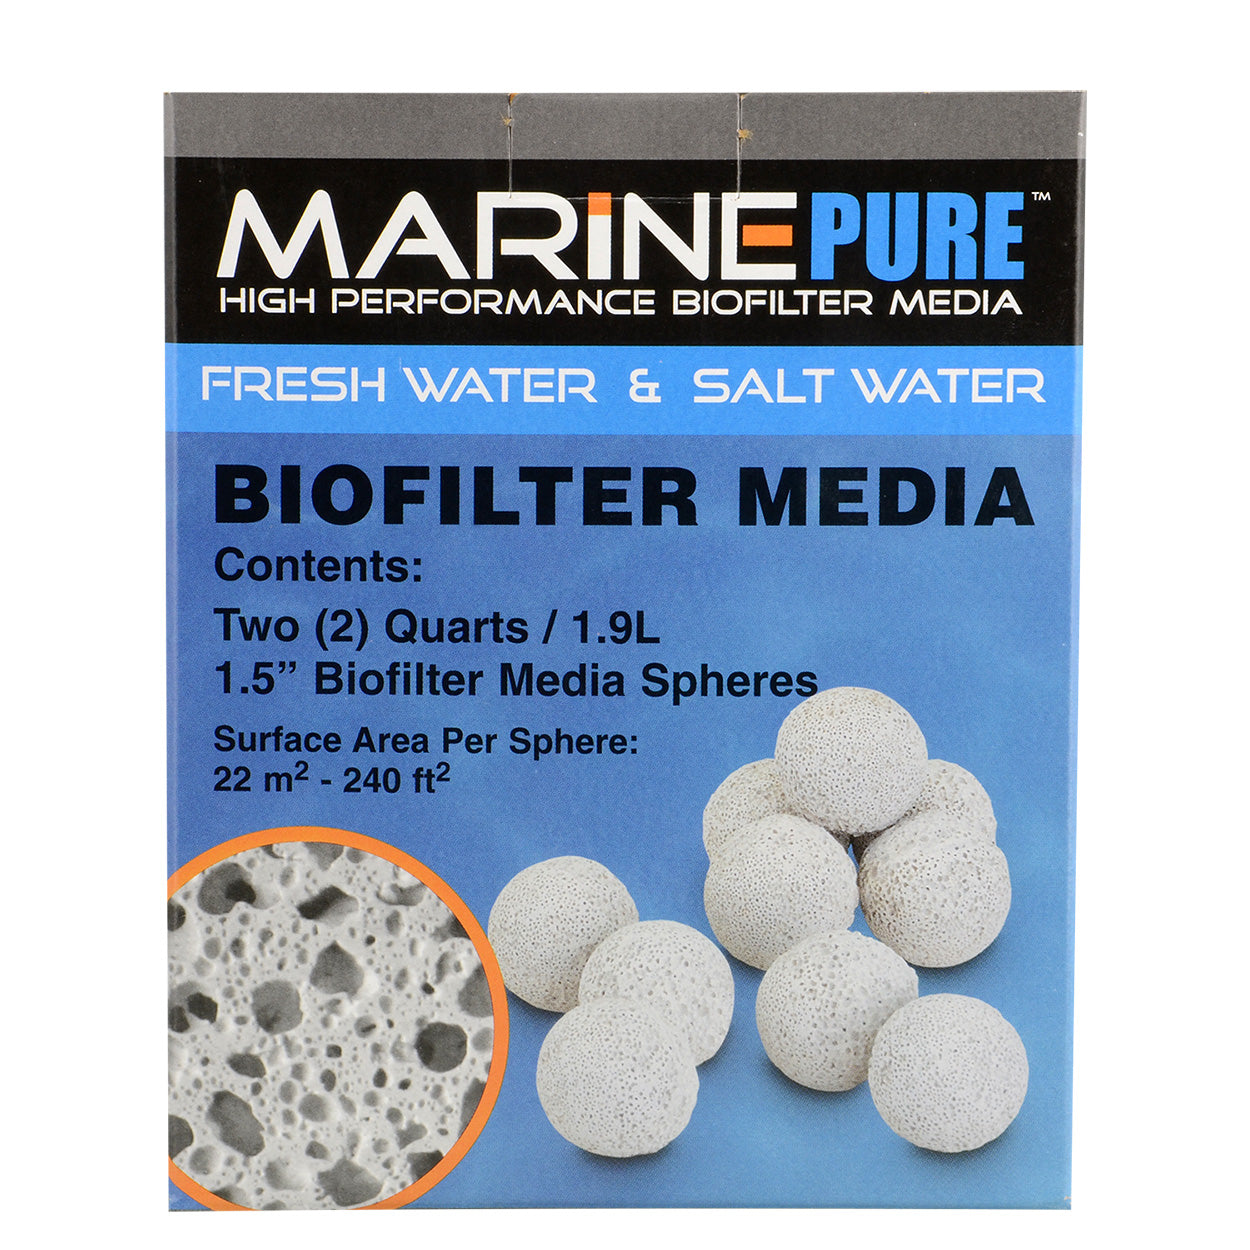 MarinePure Biofilter Media Spheres - 1.5" - 2qt